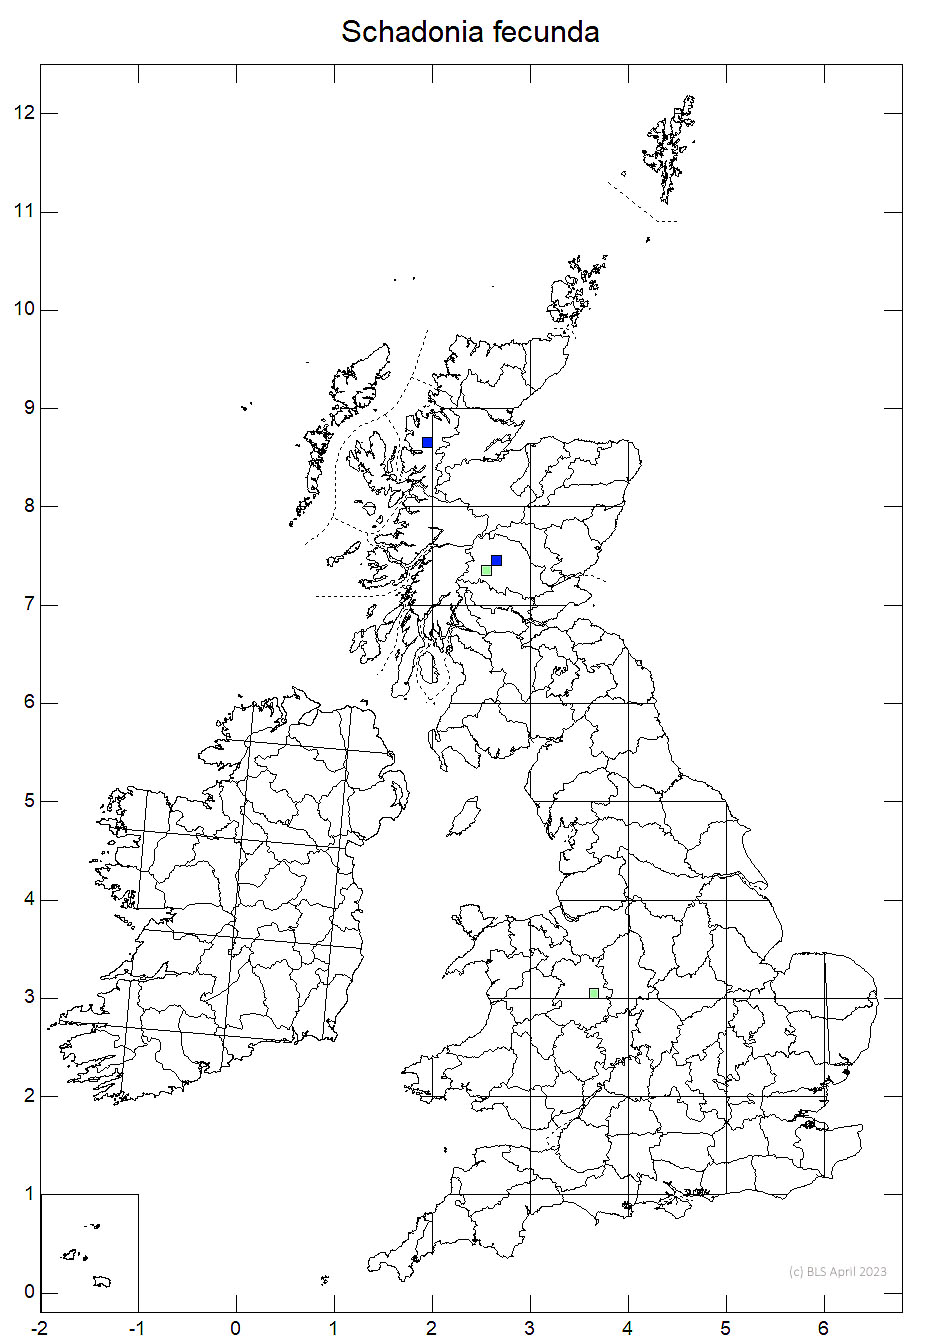 Schadonia fecunda 10km sq distribution map